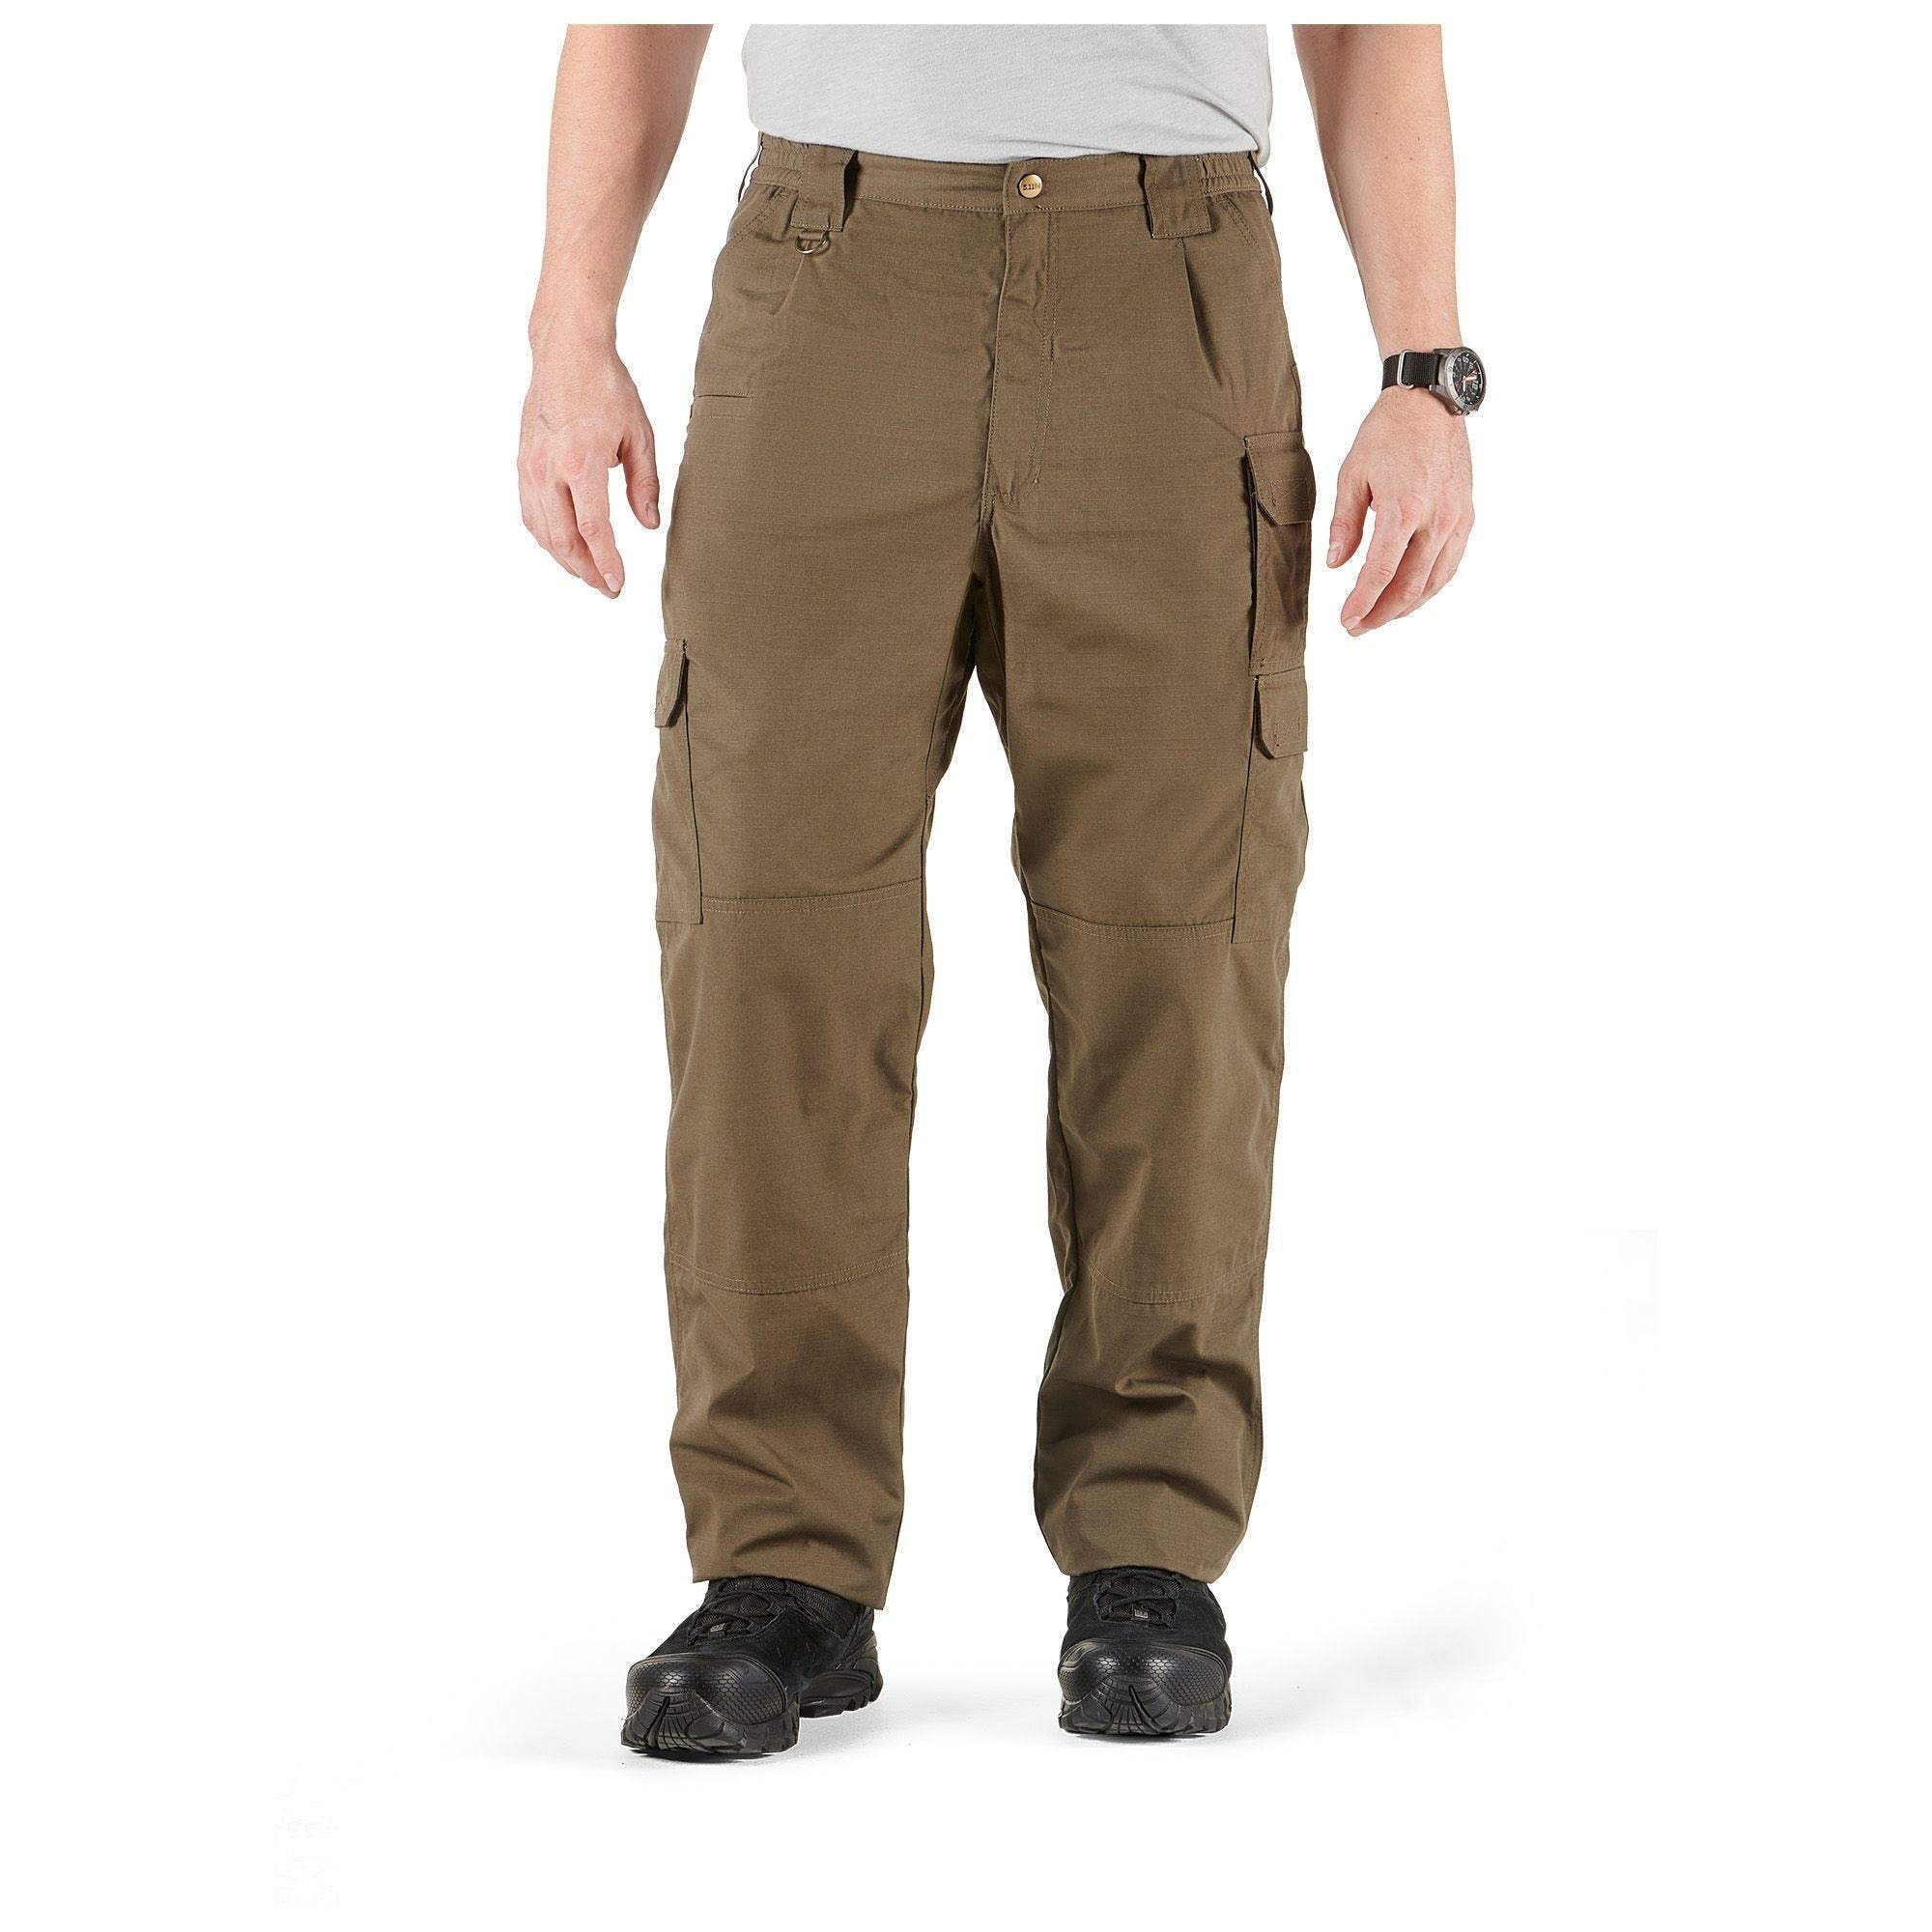 5.11 - Men's Taclite Pro Pants